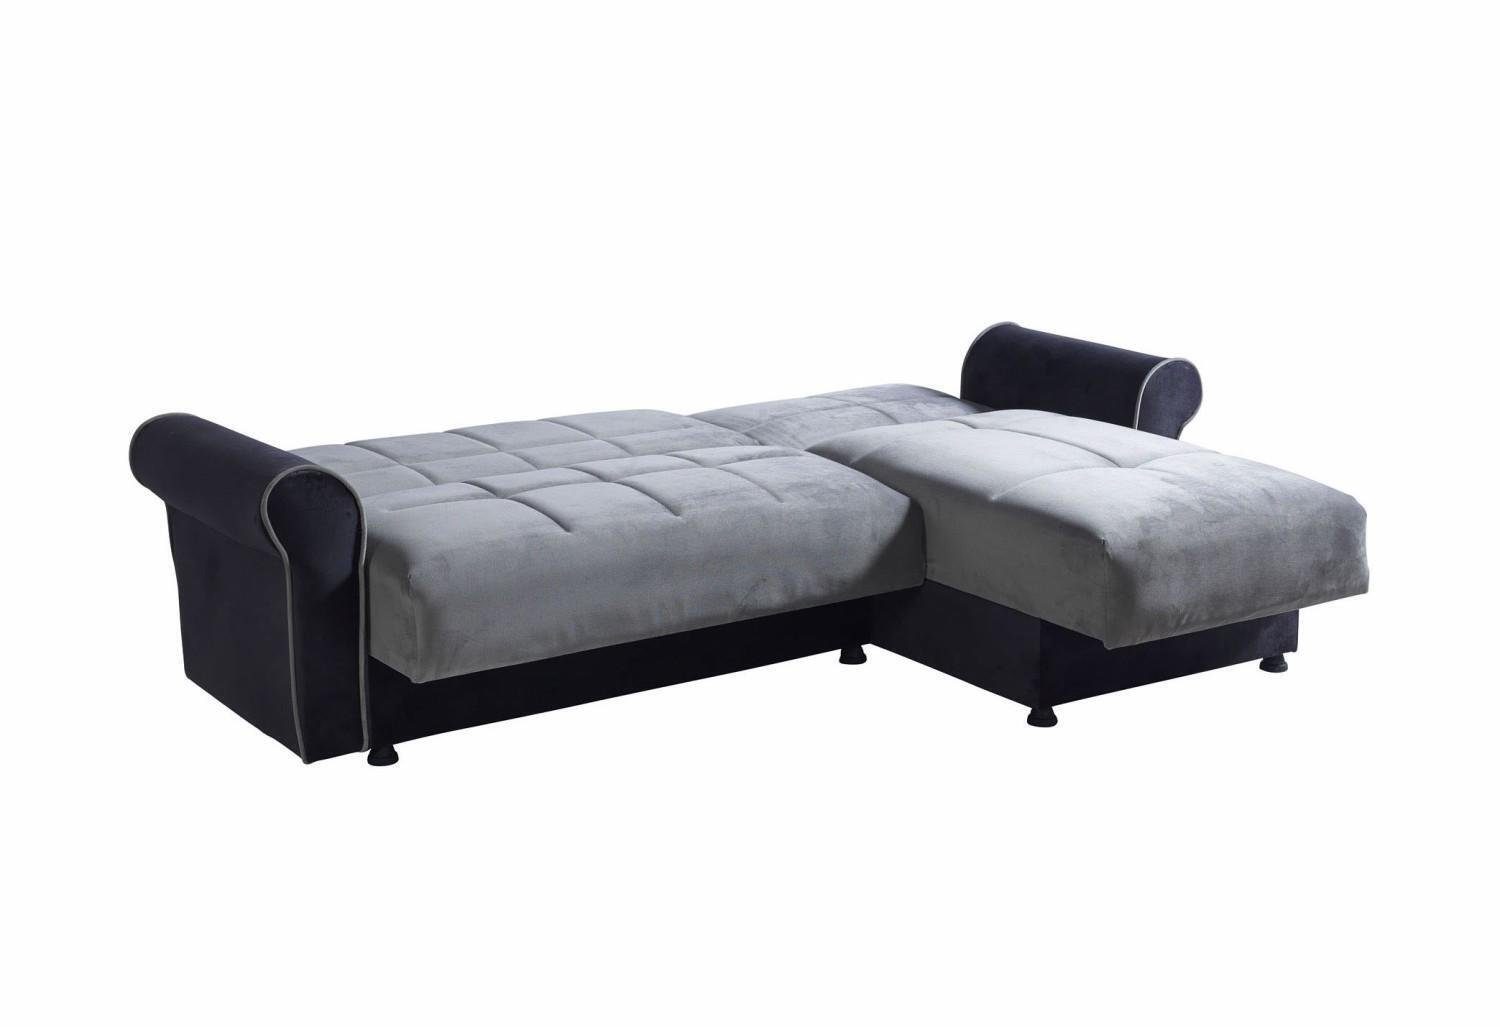 JVmoebel Textil Couch Modern Eckcouch Neu, Ecksofa Sofa Made In Europe L-Form Premium Ecksofa Polster